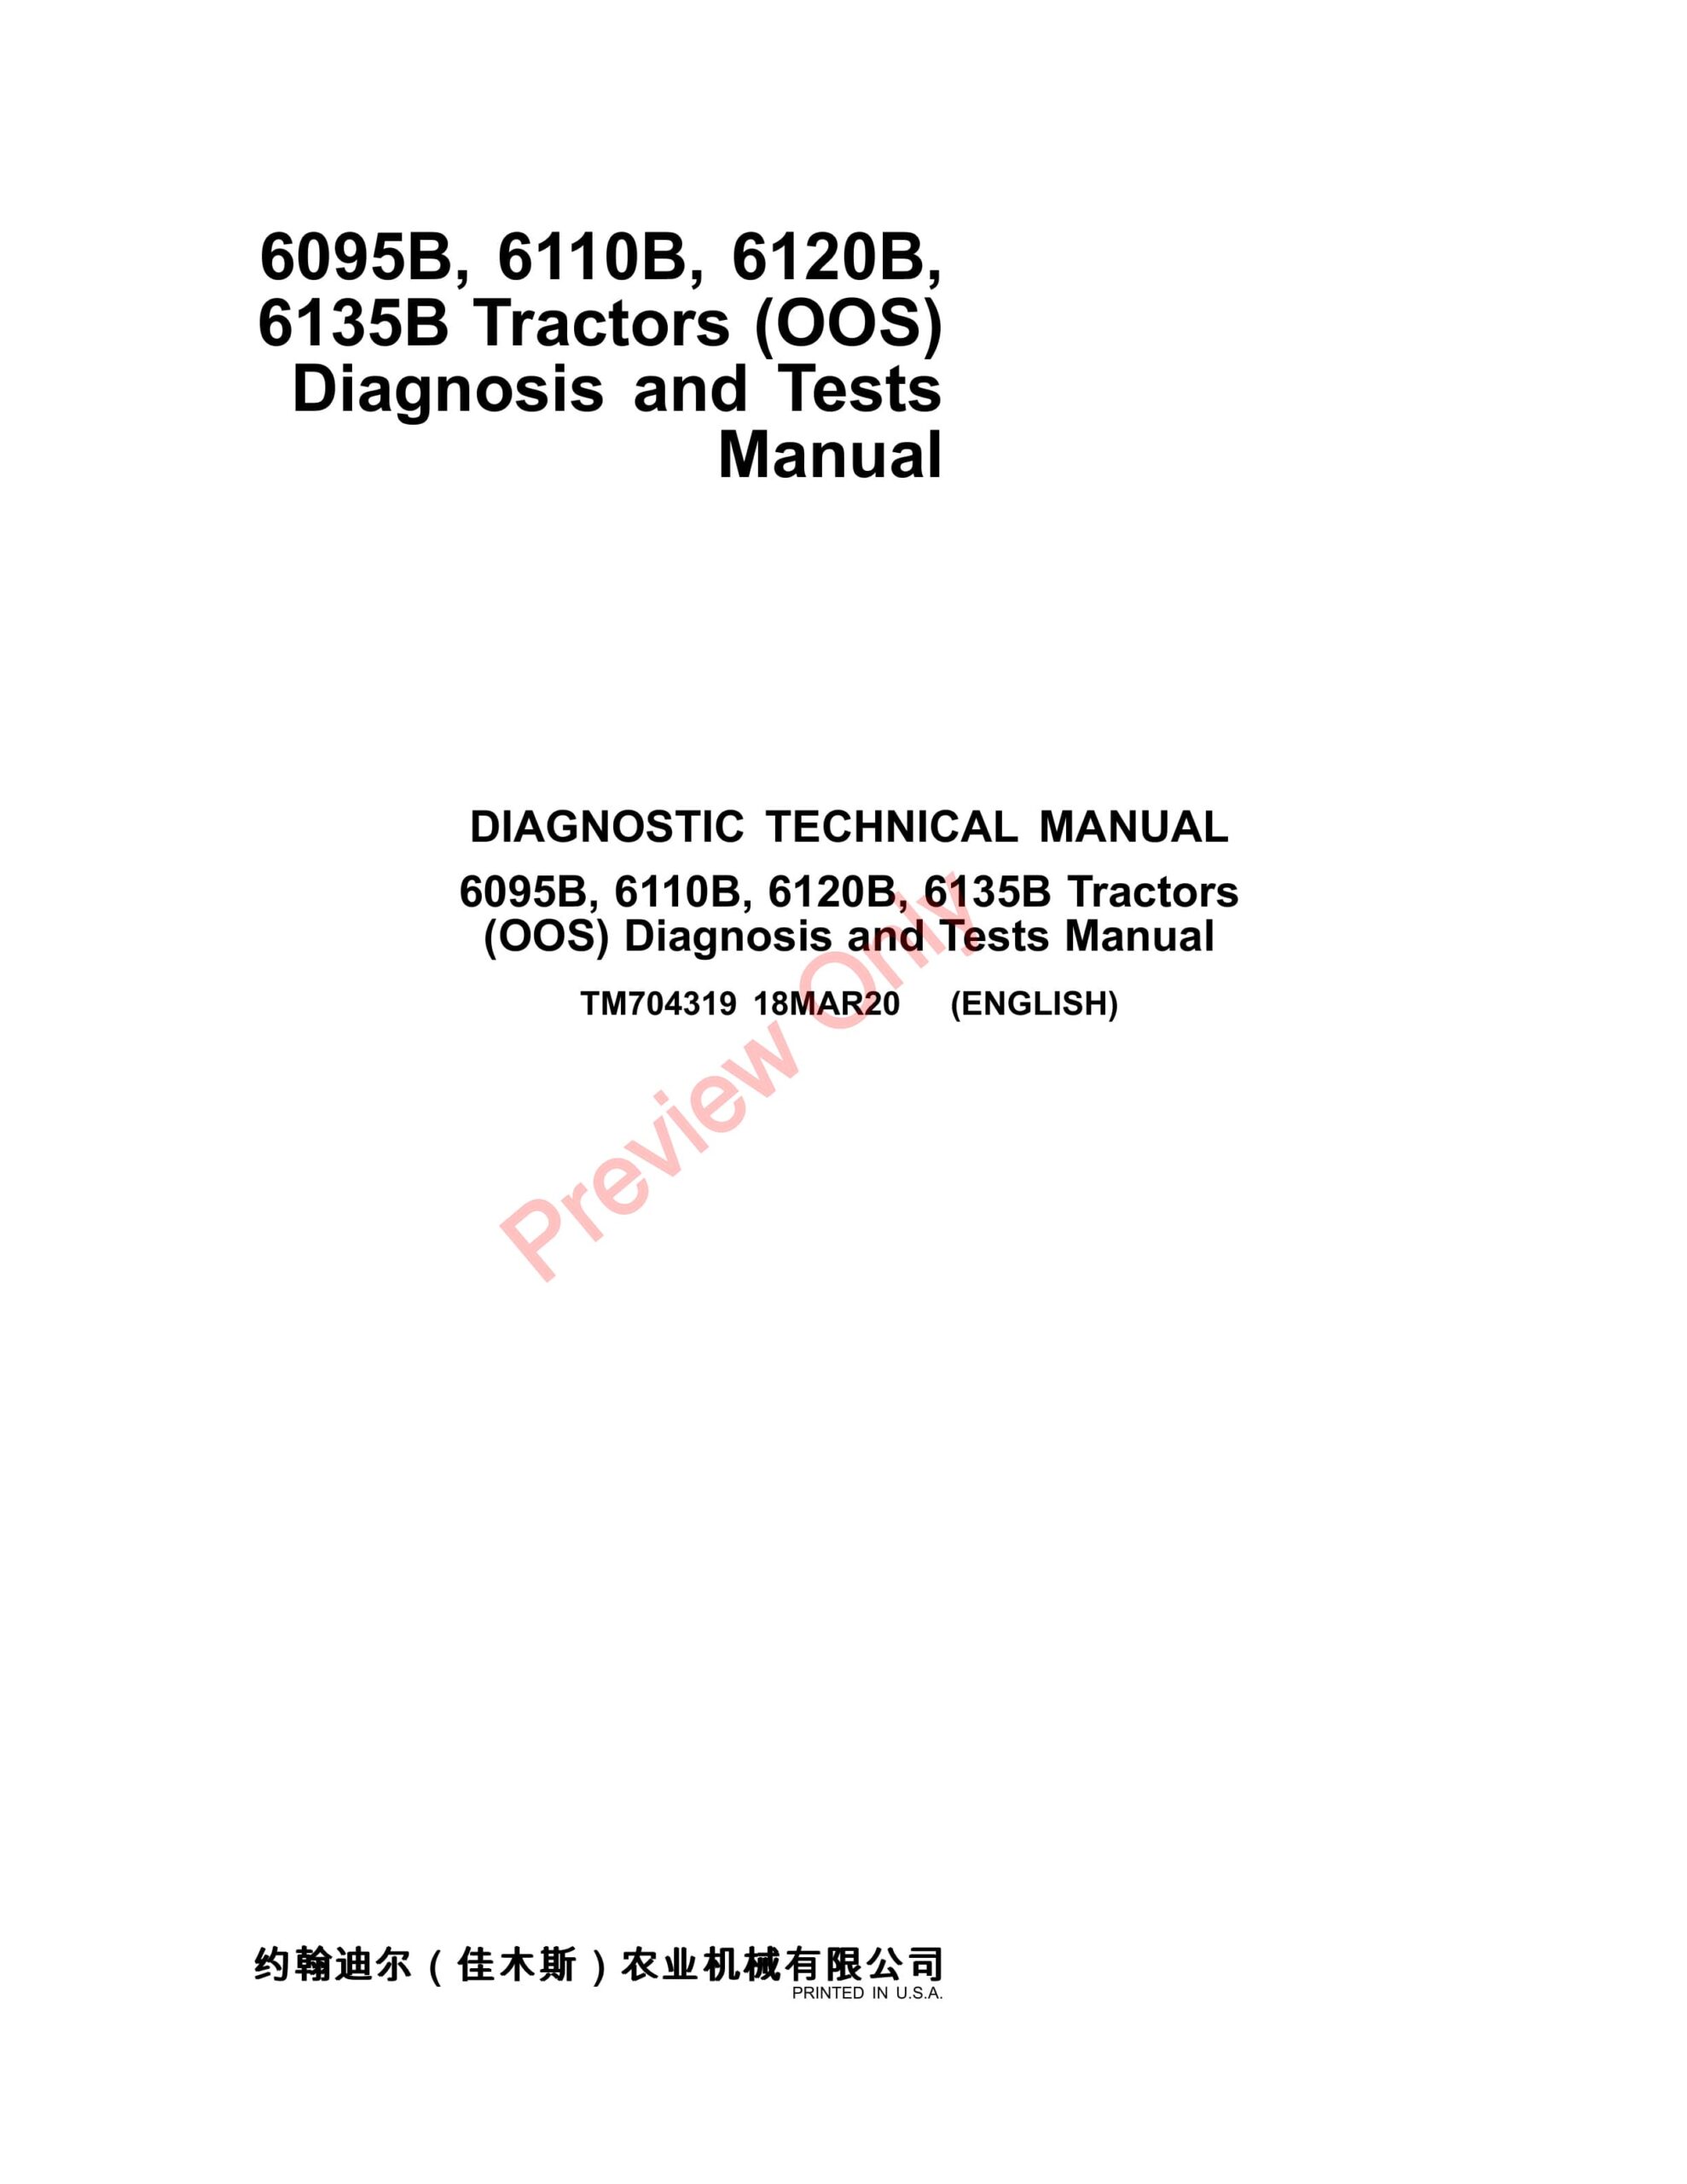 John Deere 6095B, 6110B, 6120B, 6135B Tractors (OOS)(MY2019-) Diagnostic Technical Manual TM704319 18MAR20-1